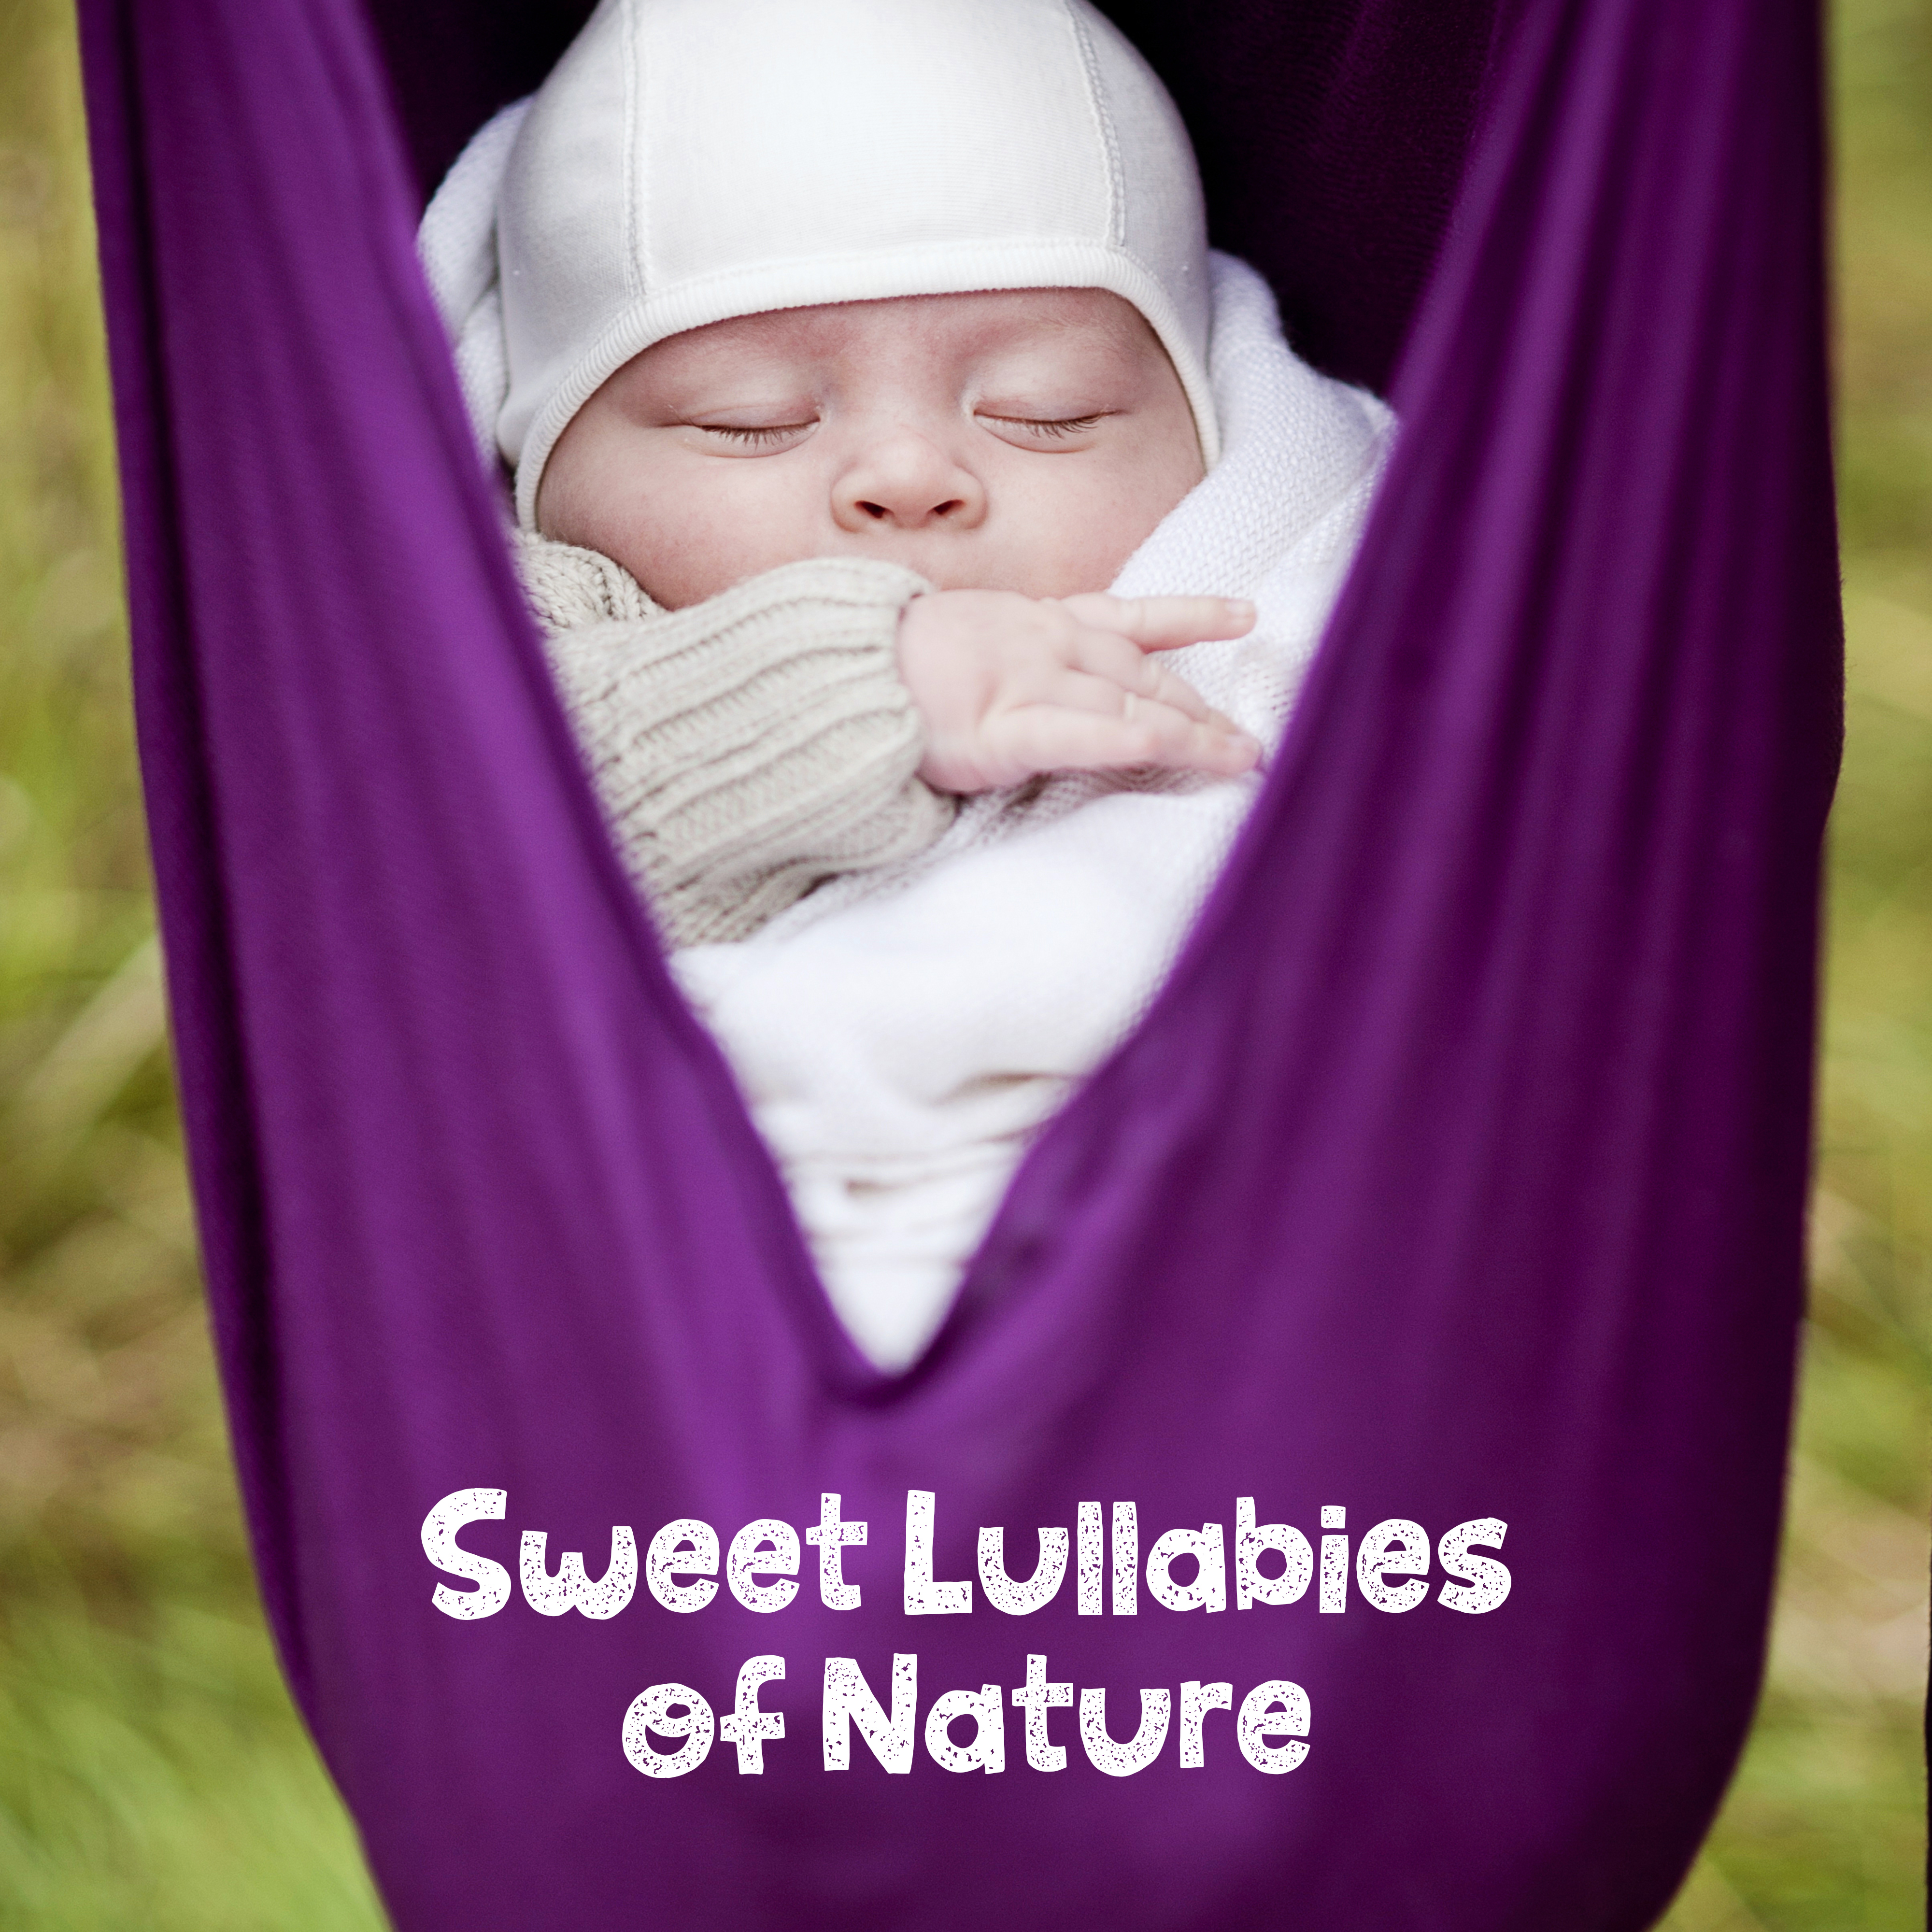 Sweet Lullabies of Nature